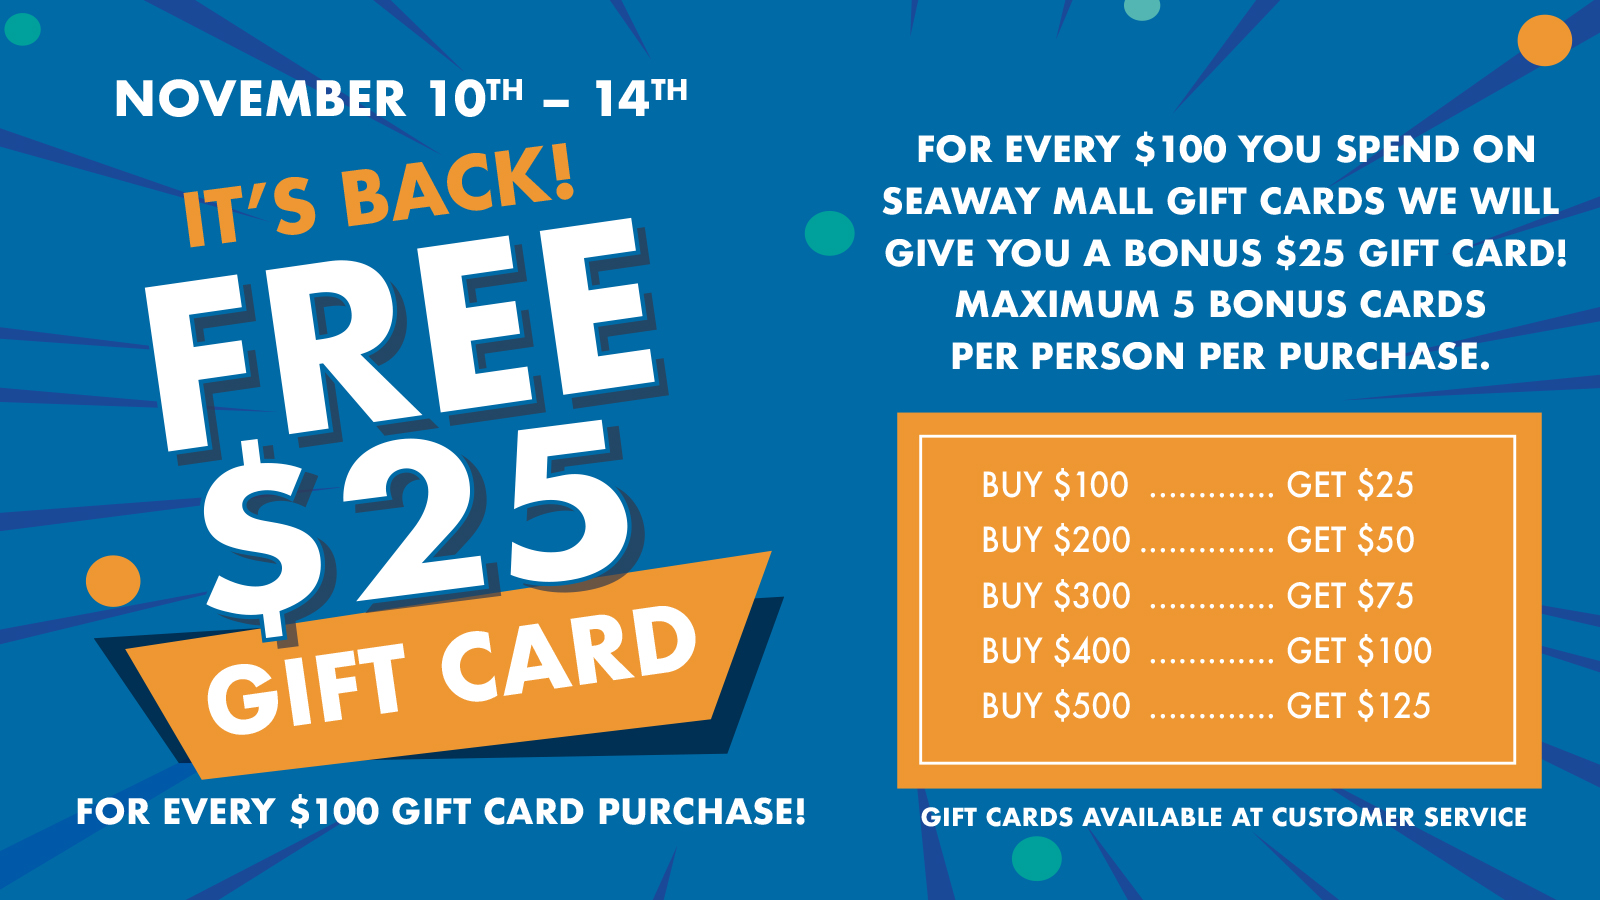 Seaway Mall Gift Card Promo Nov 10-14th